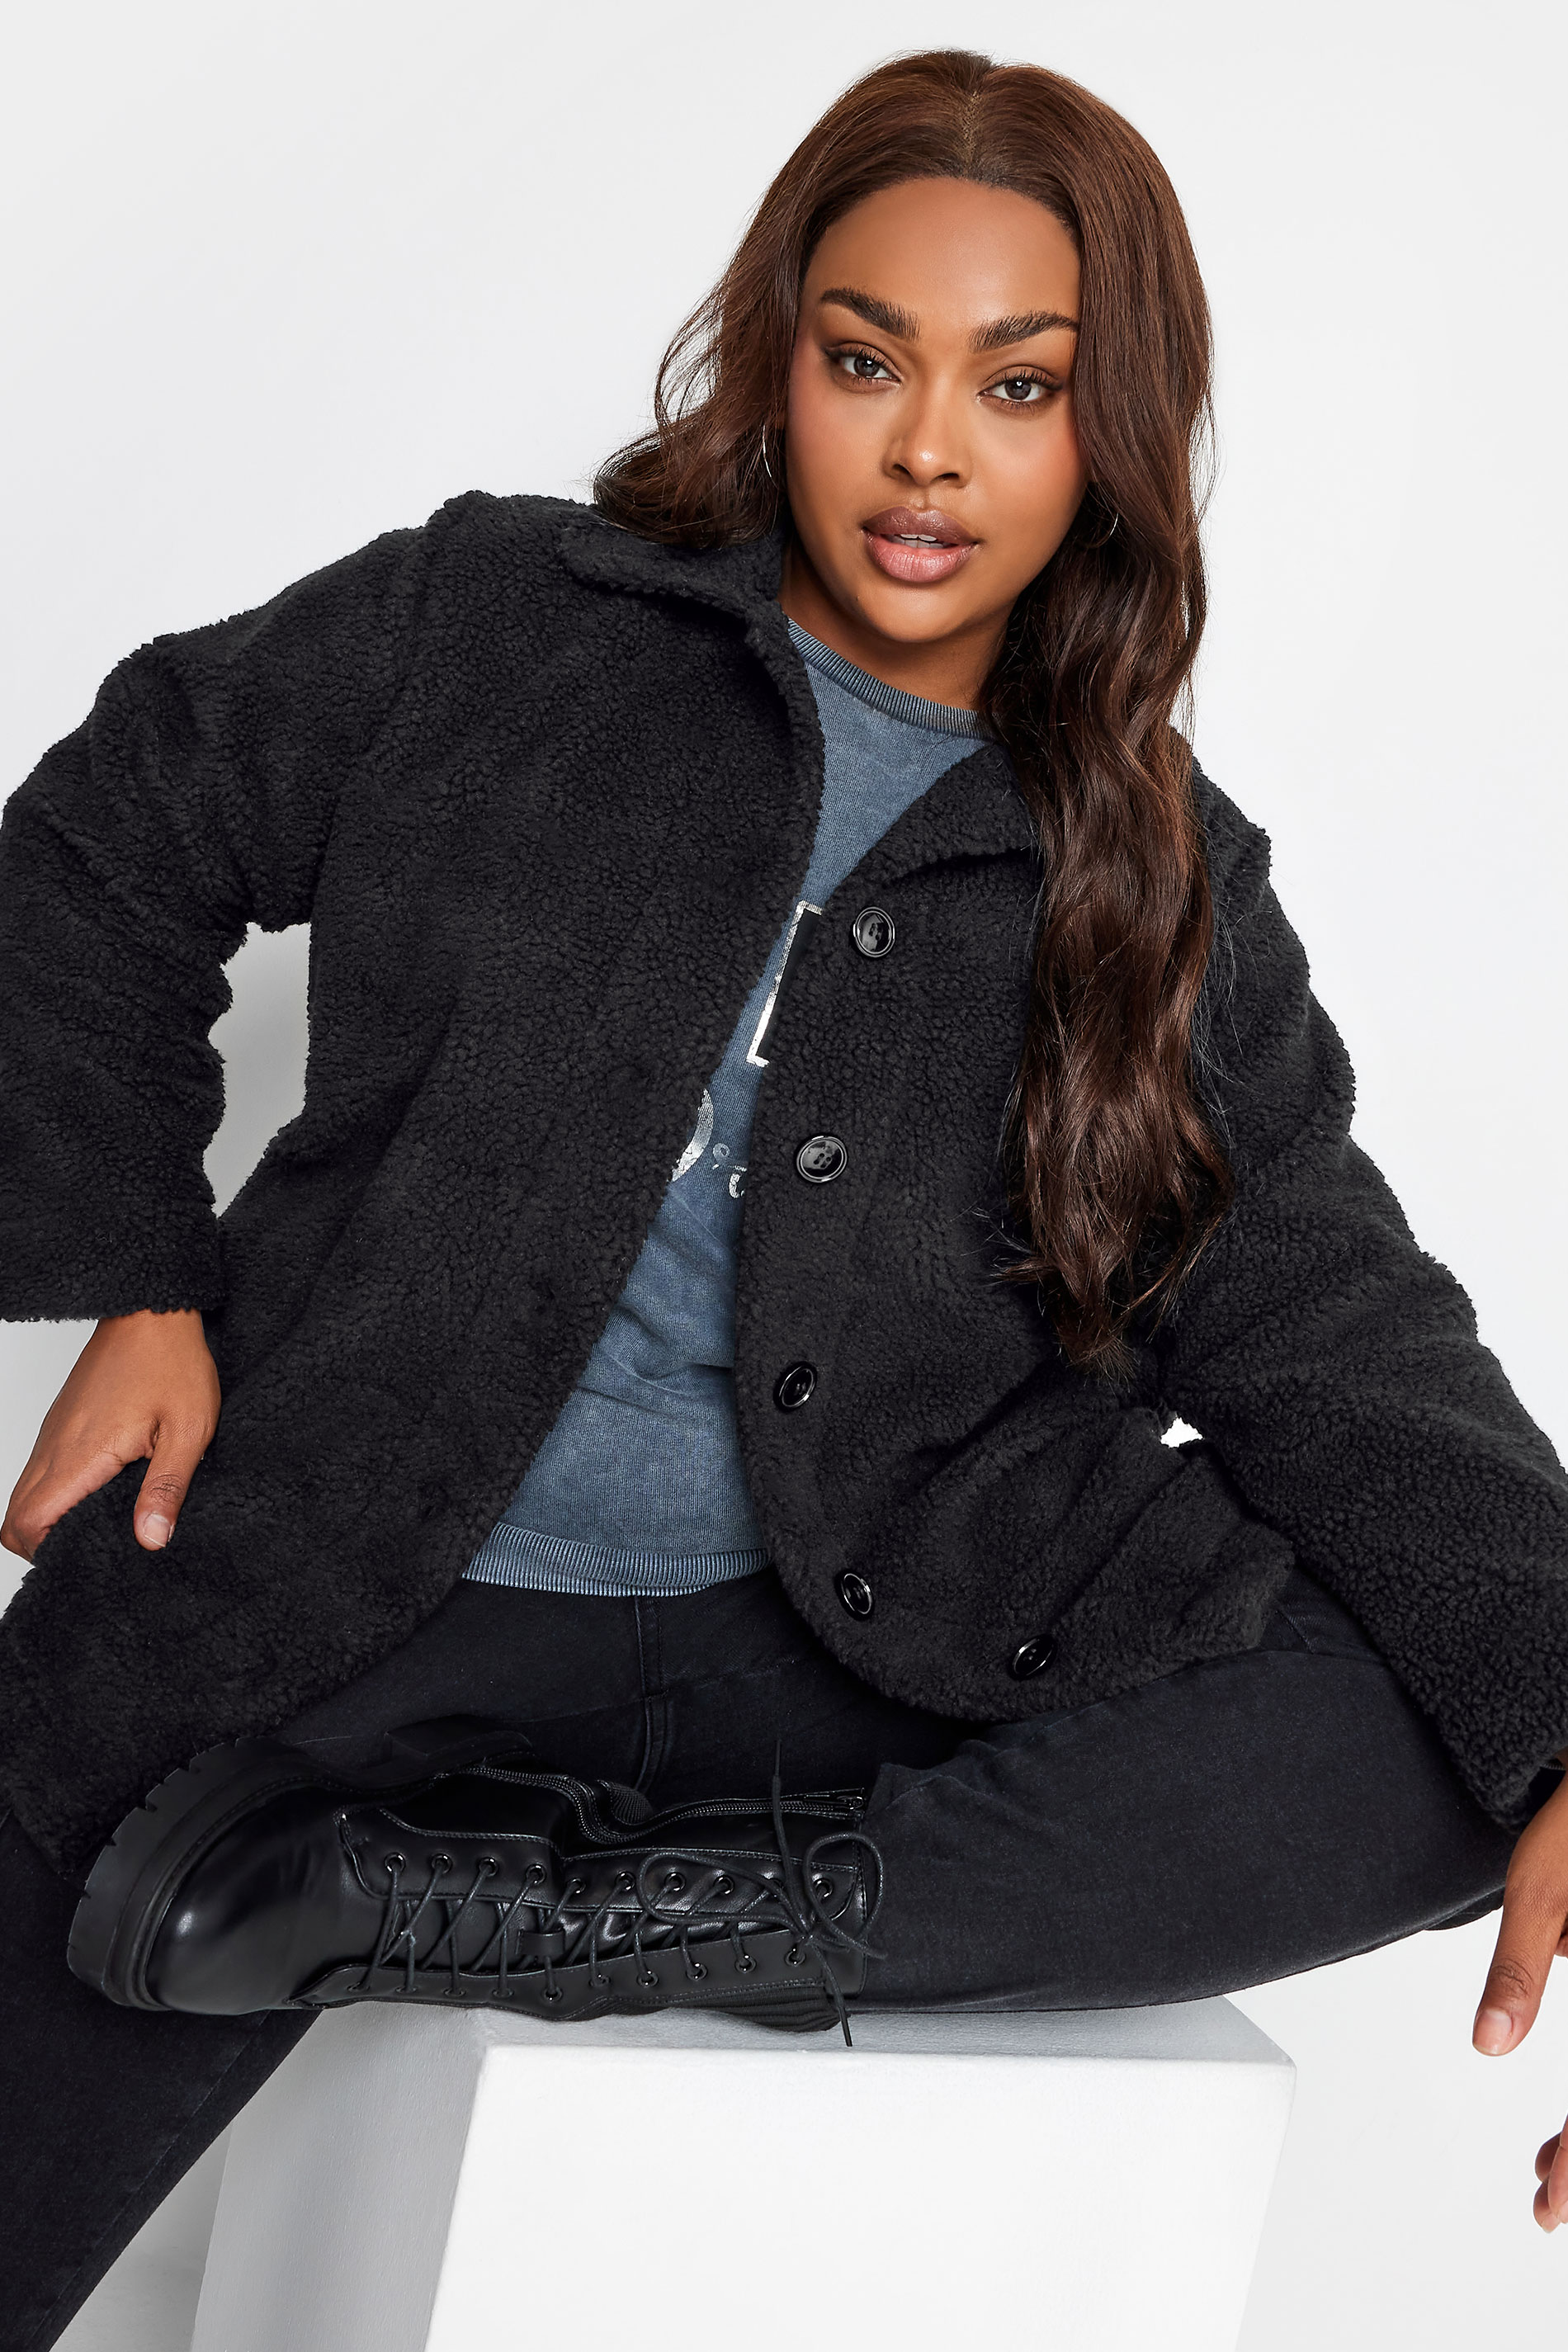 YOURS Plus Size Black Teddy Fleece Jacket | Yours Clothing 1